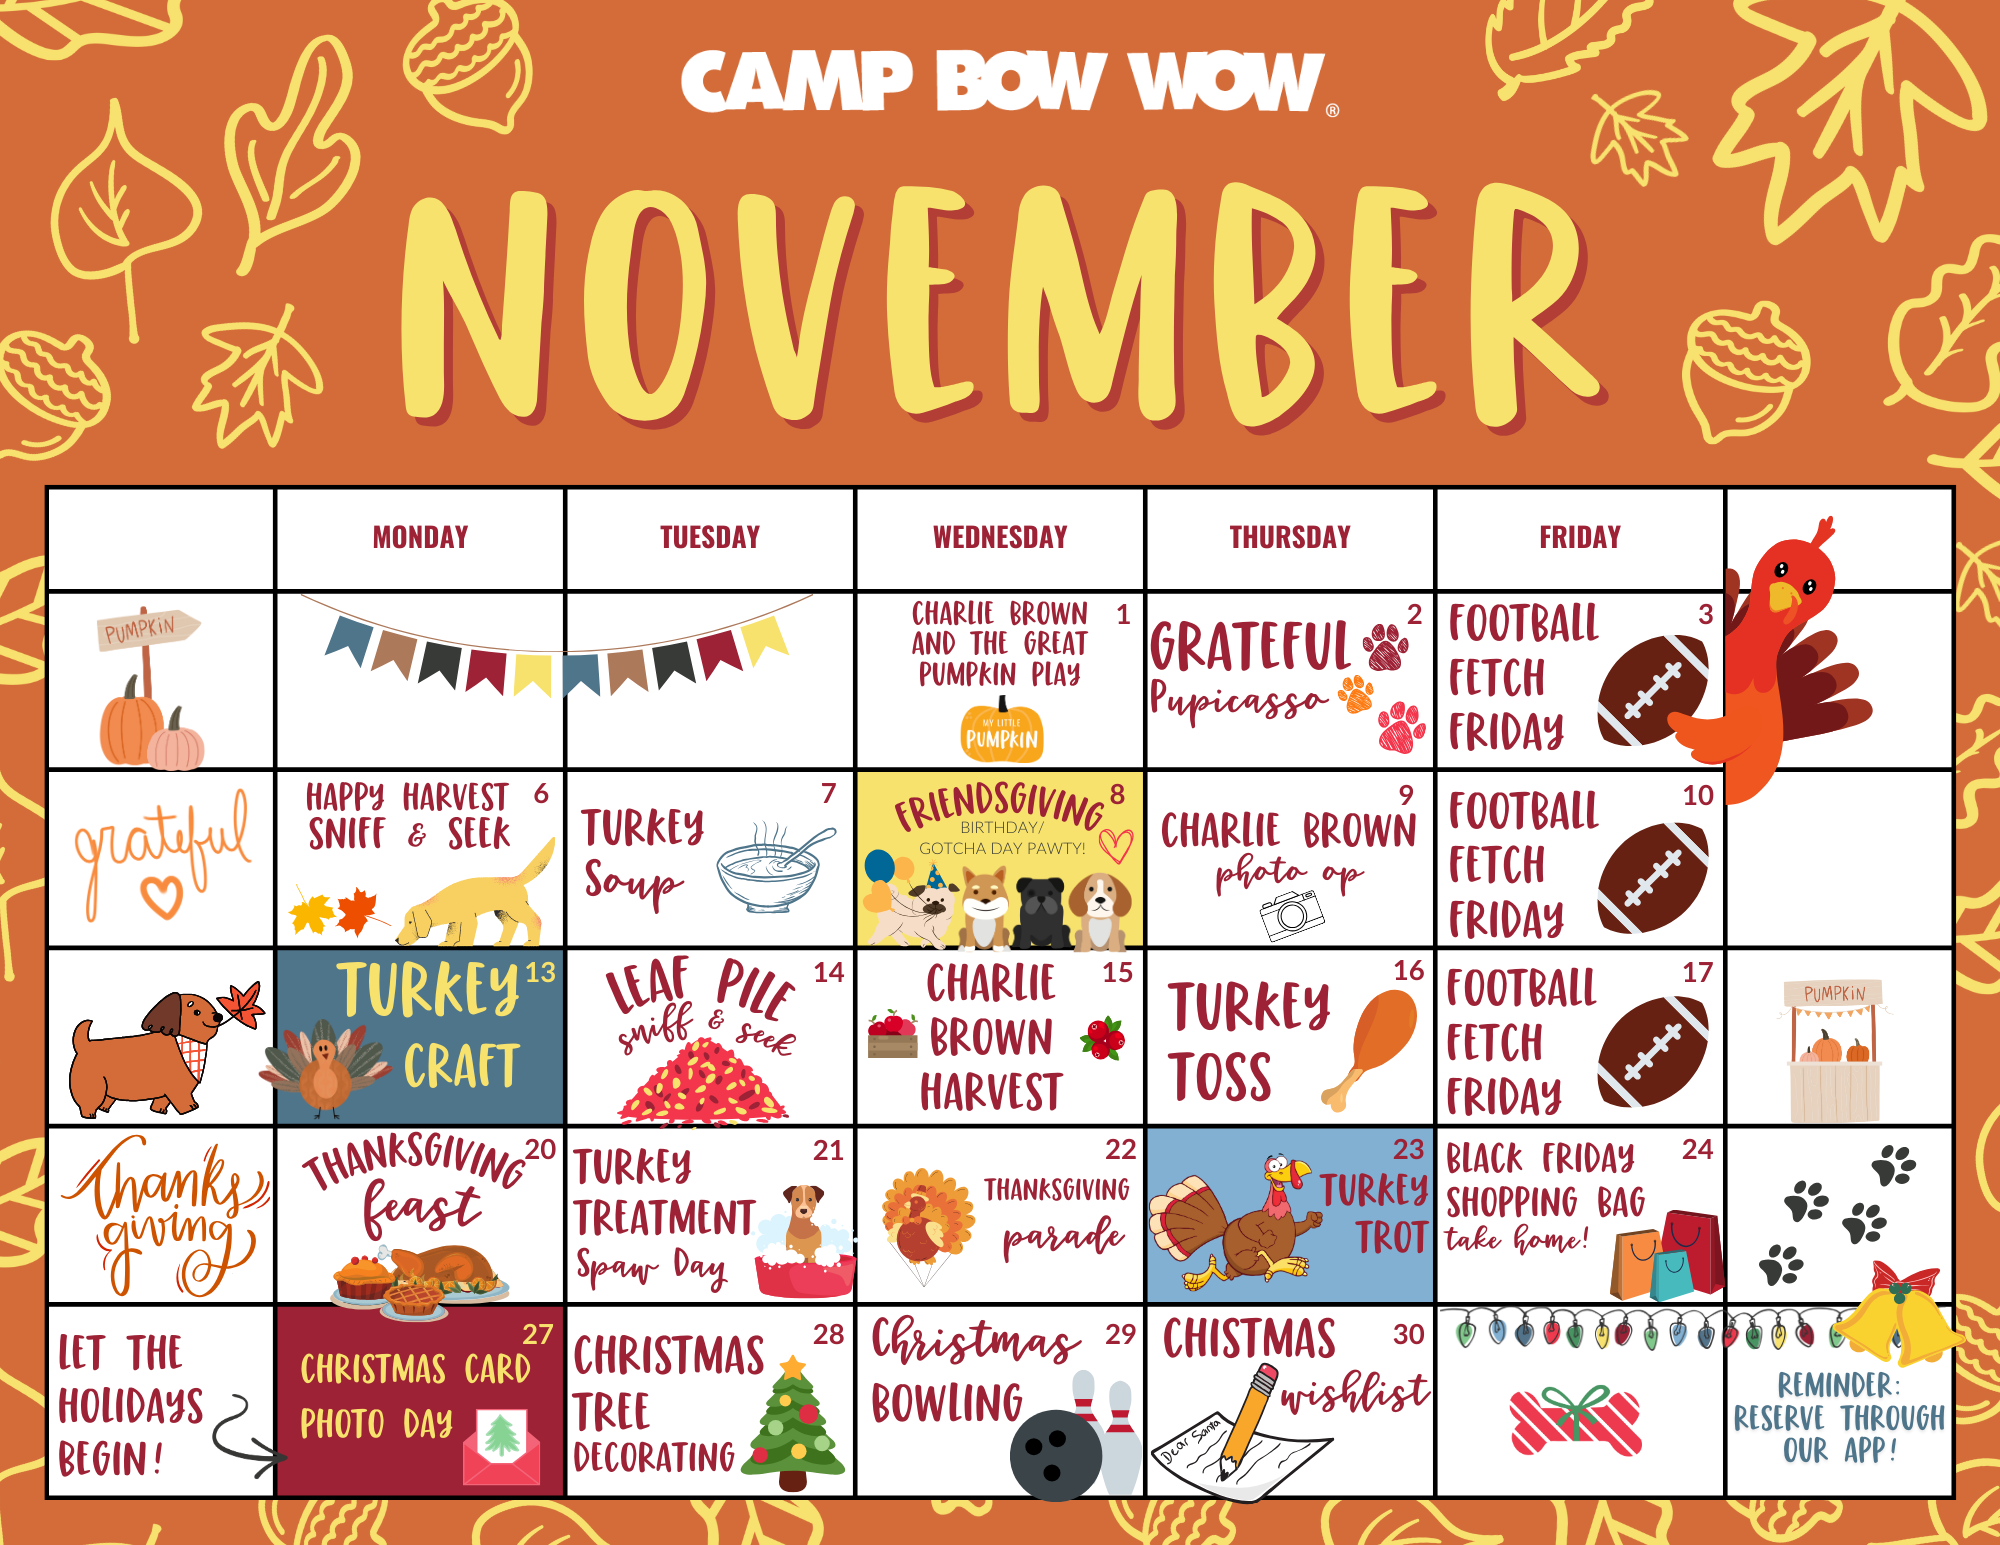 Camp Bow Wow November events calendar